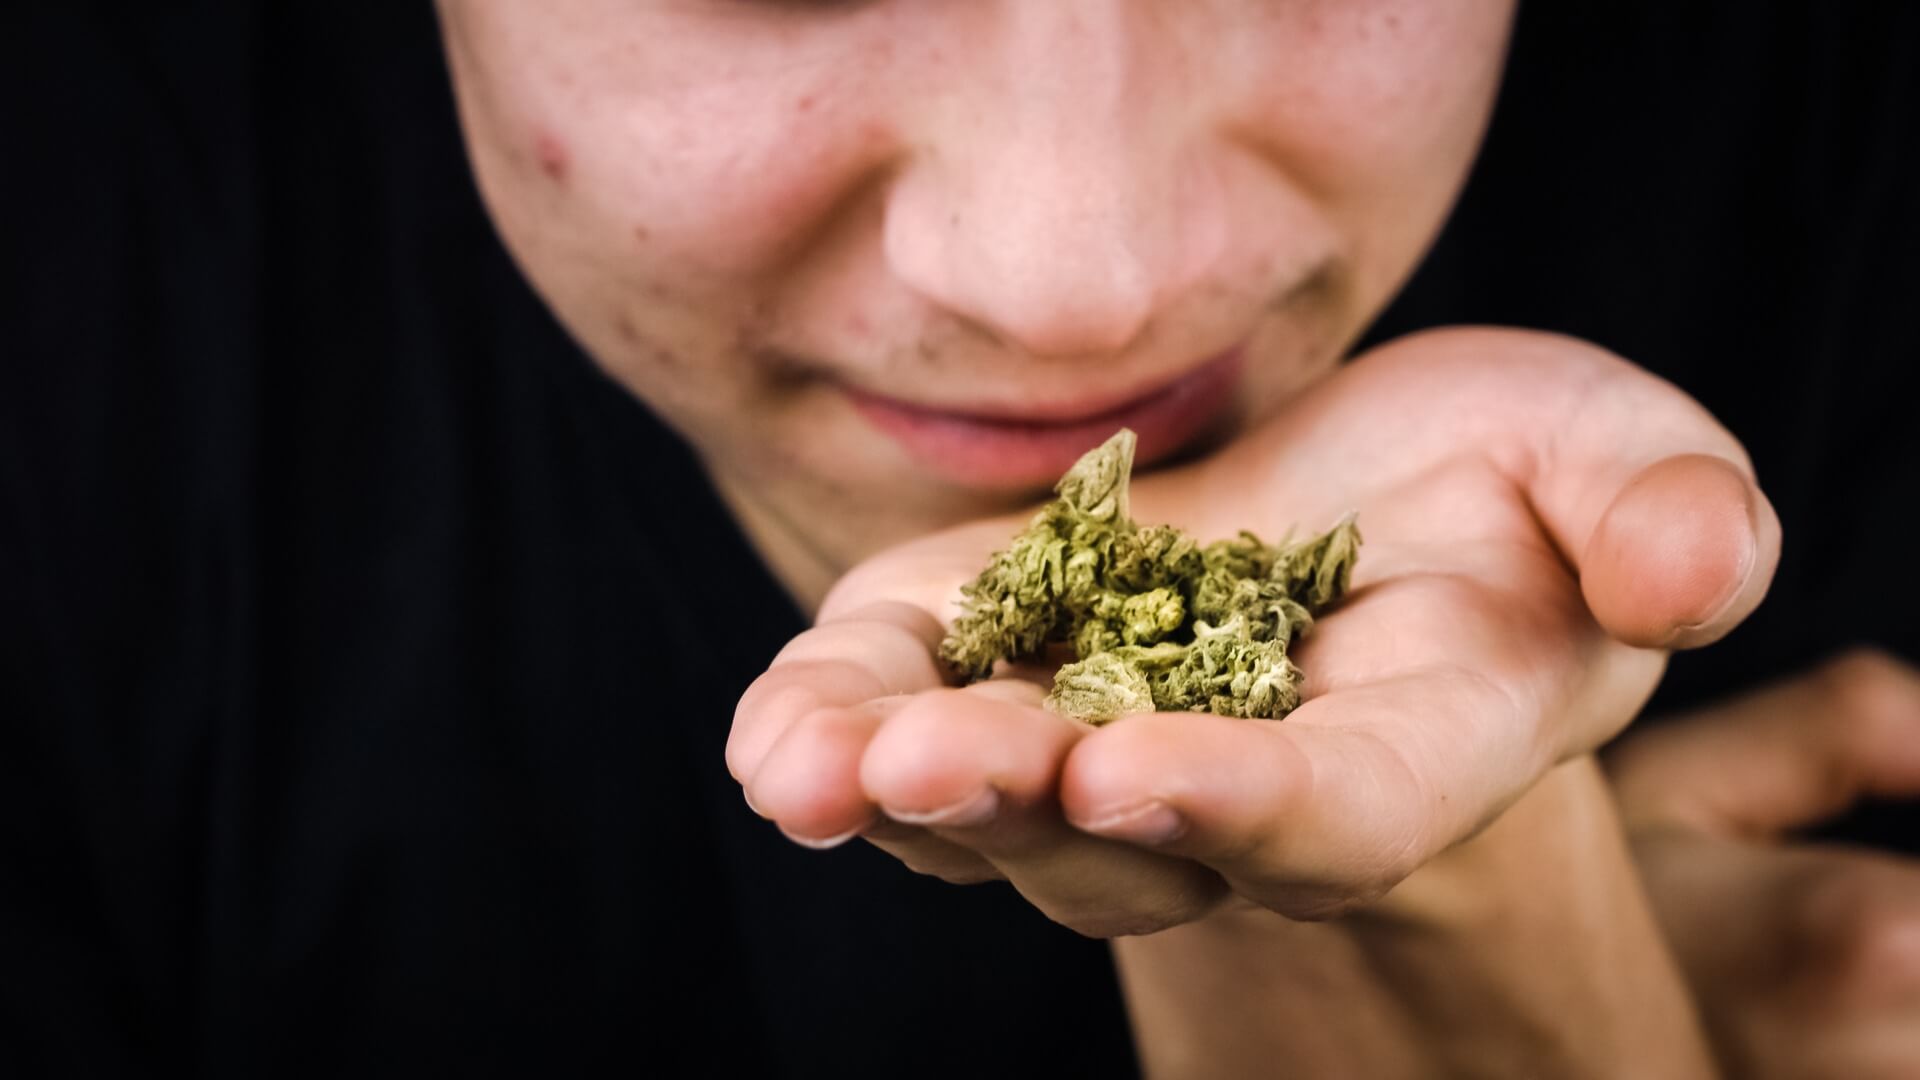 A man smelling cannabis buds